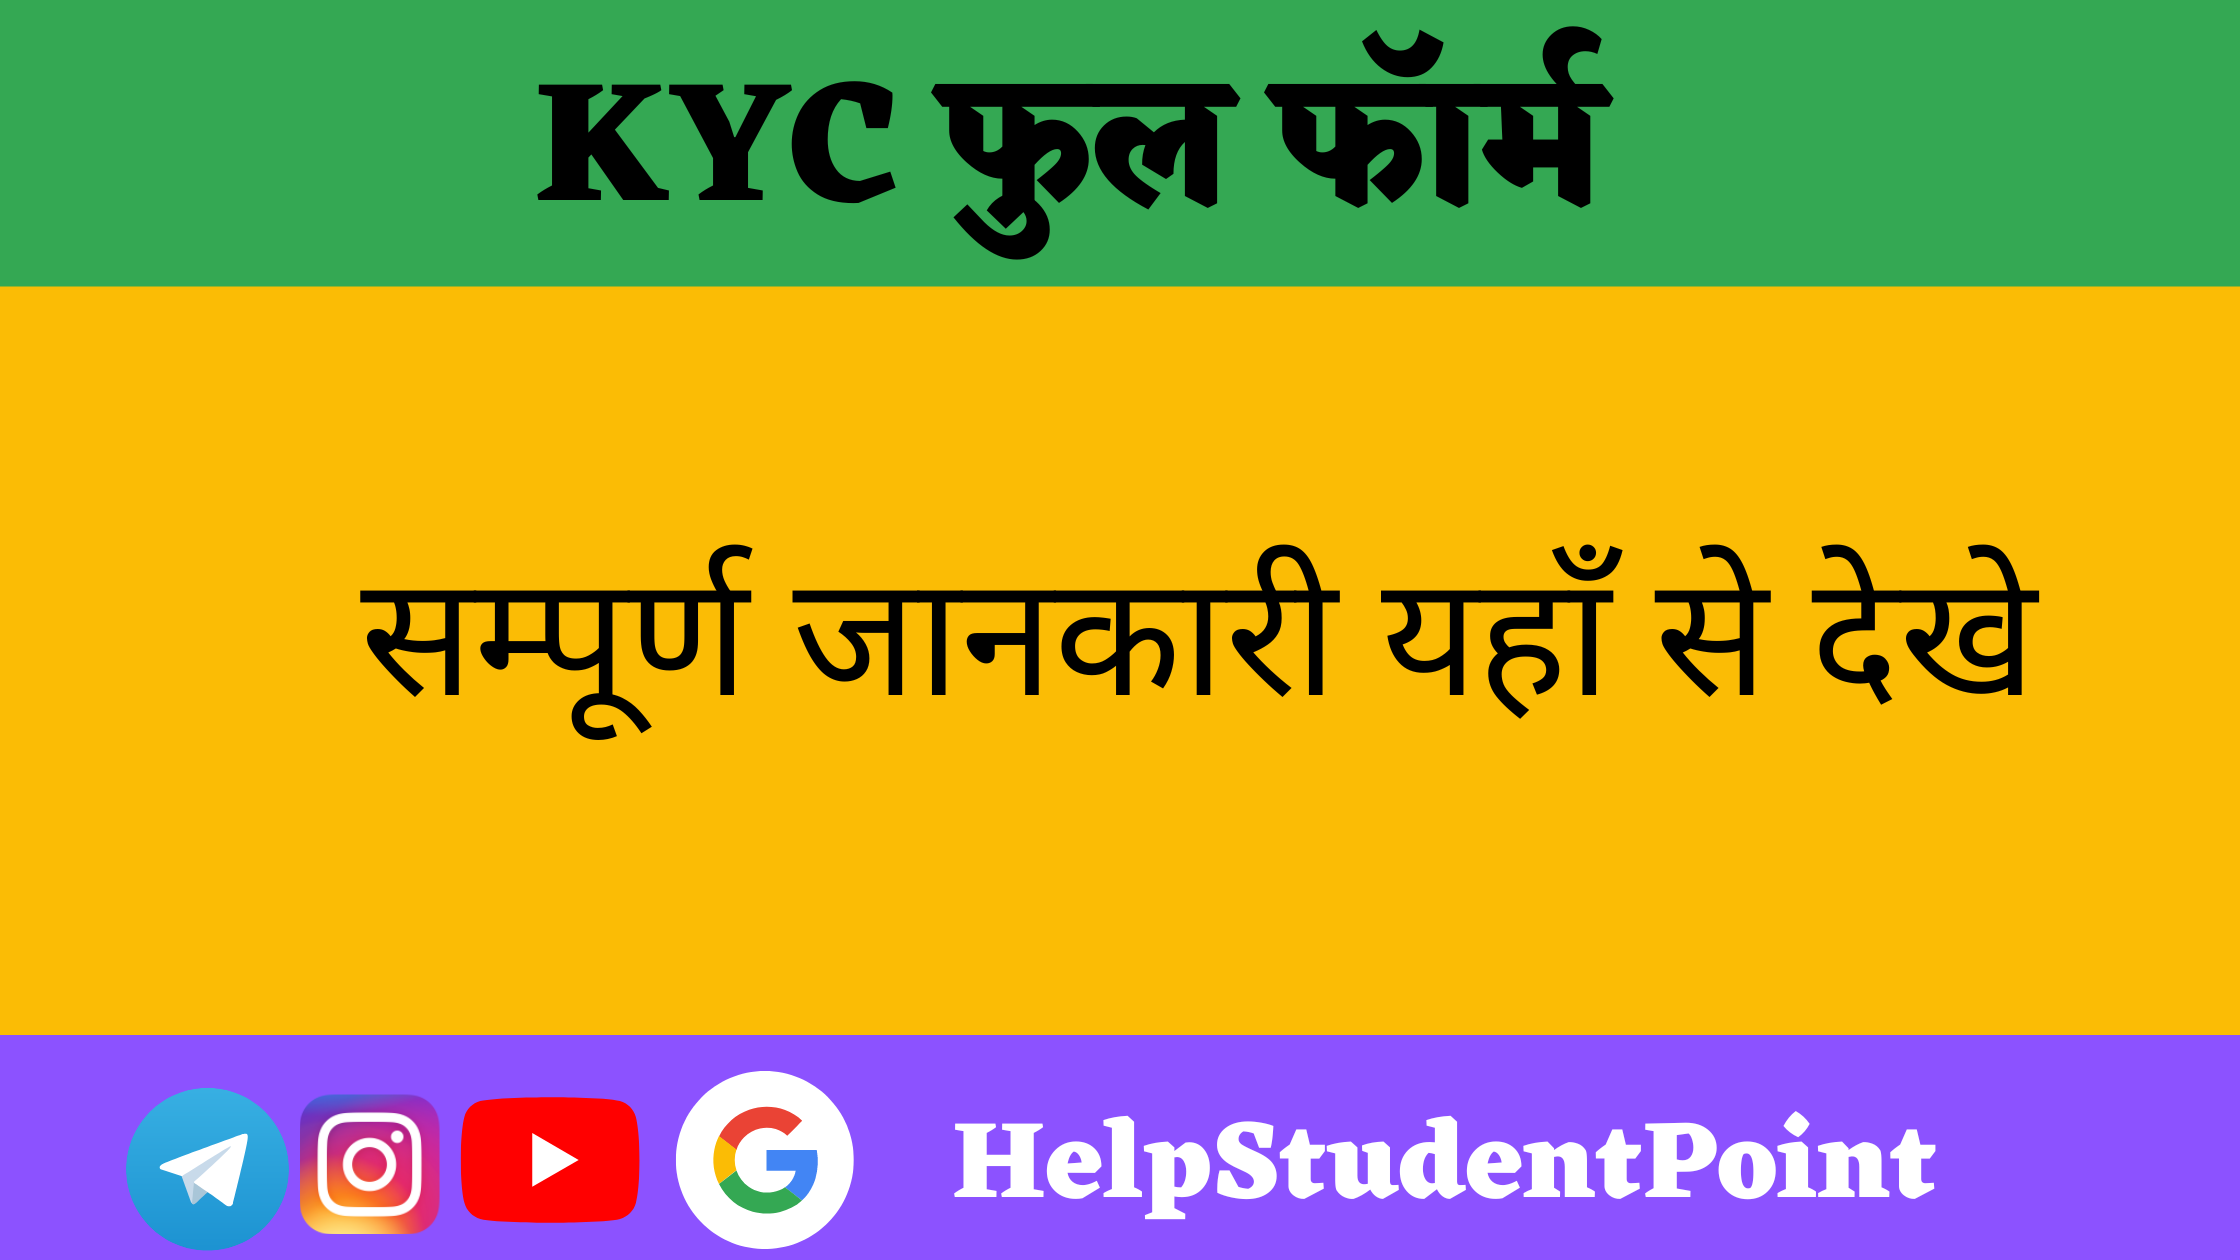 KYC Full Form in Hindi